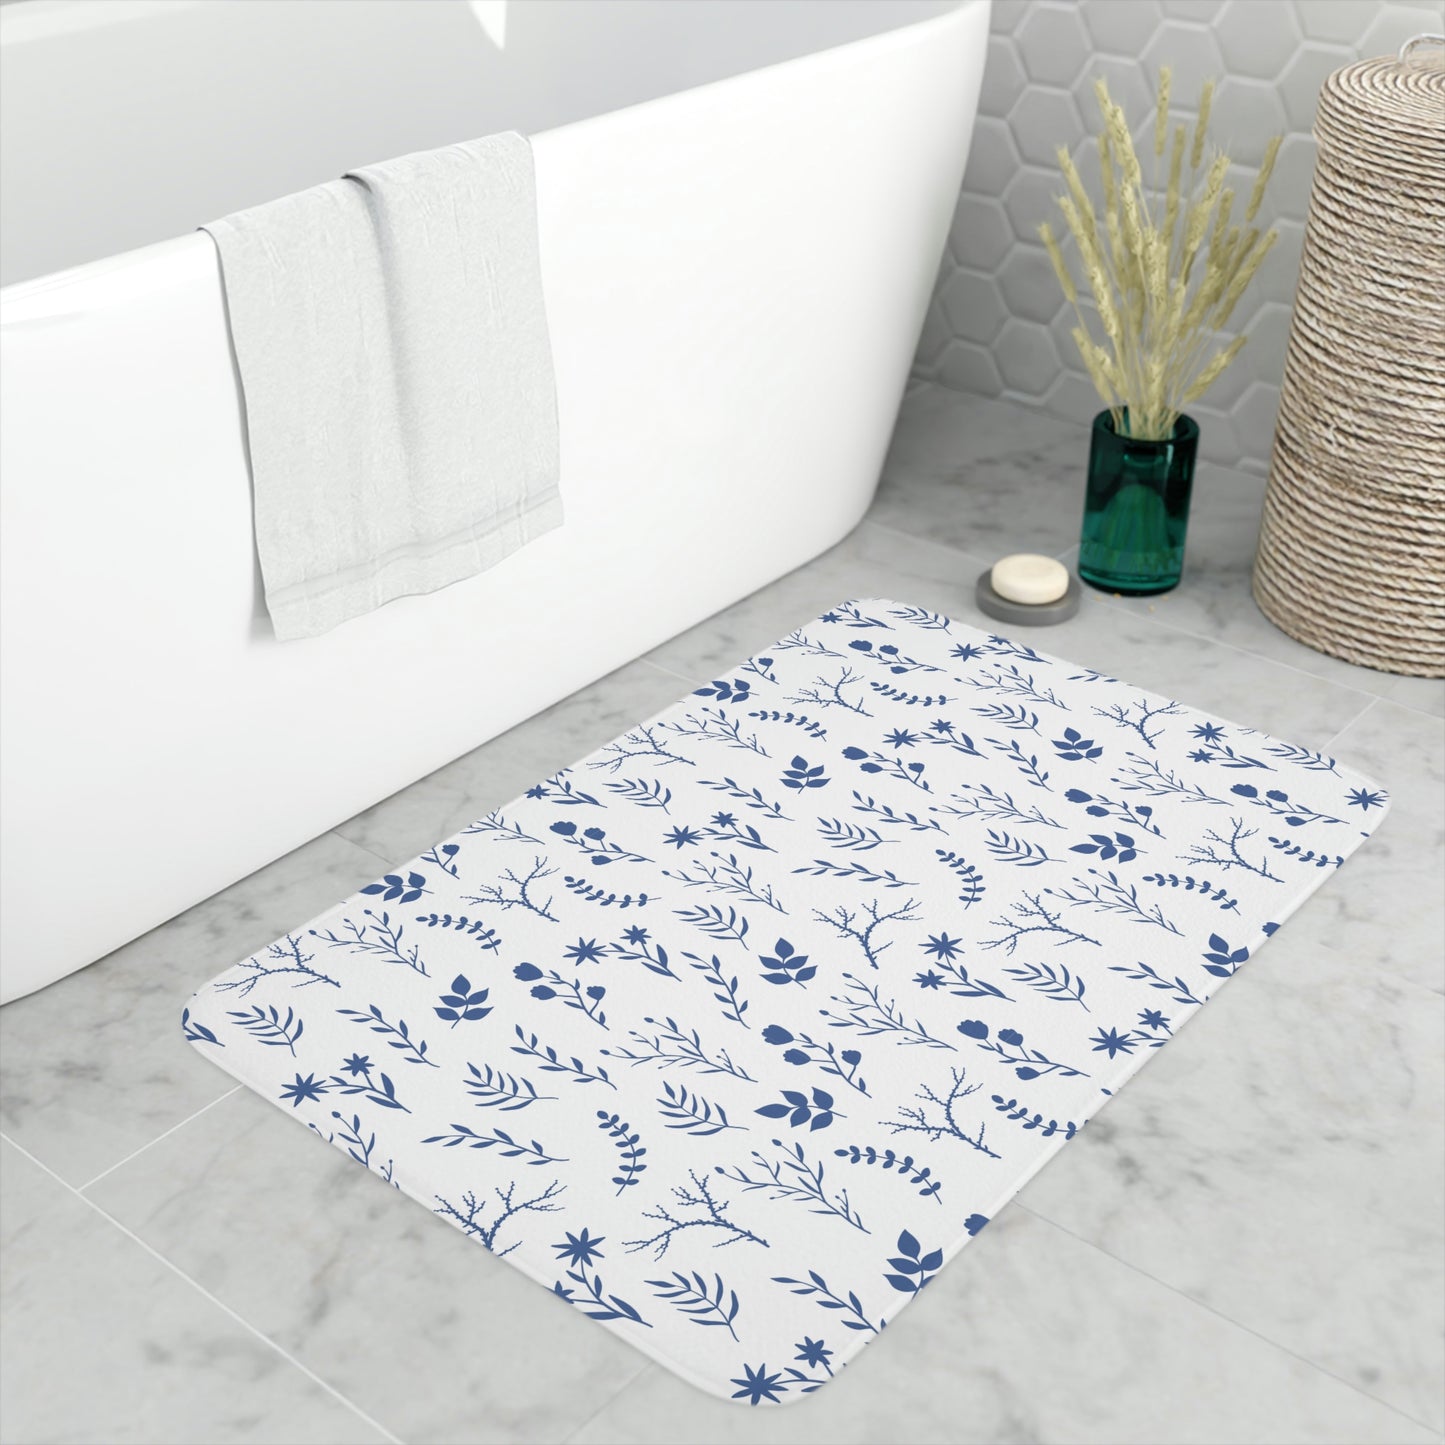 Indigo Blue and White Floral Print Bathmat | Indigo Blue Anti-slip Bathmat